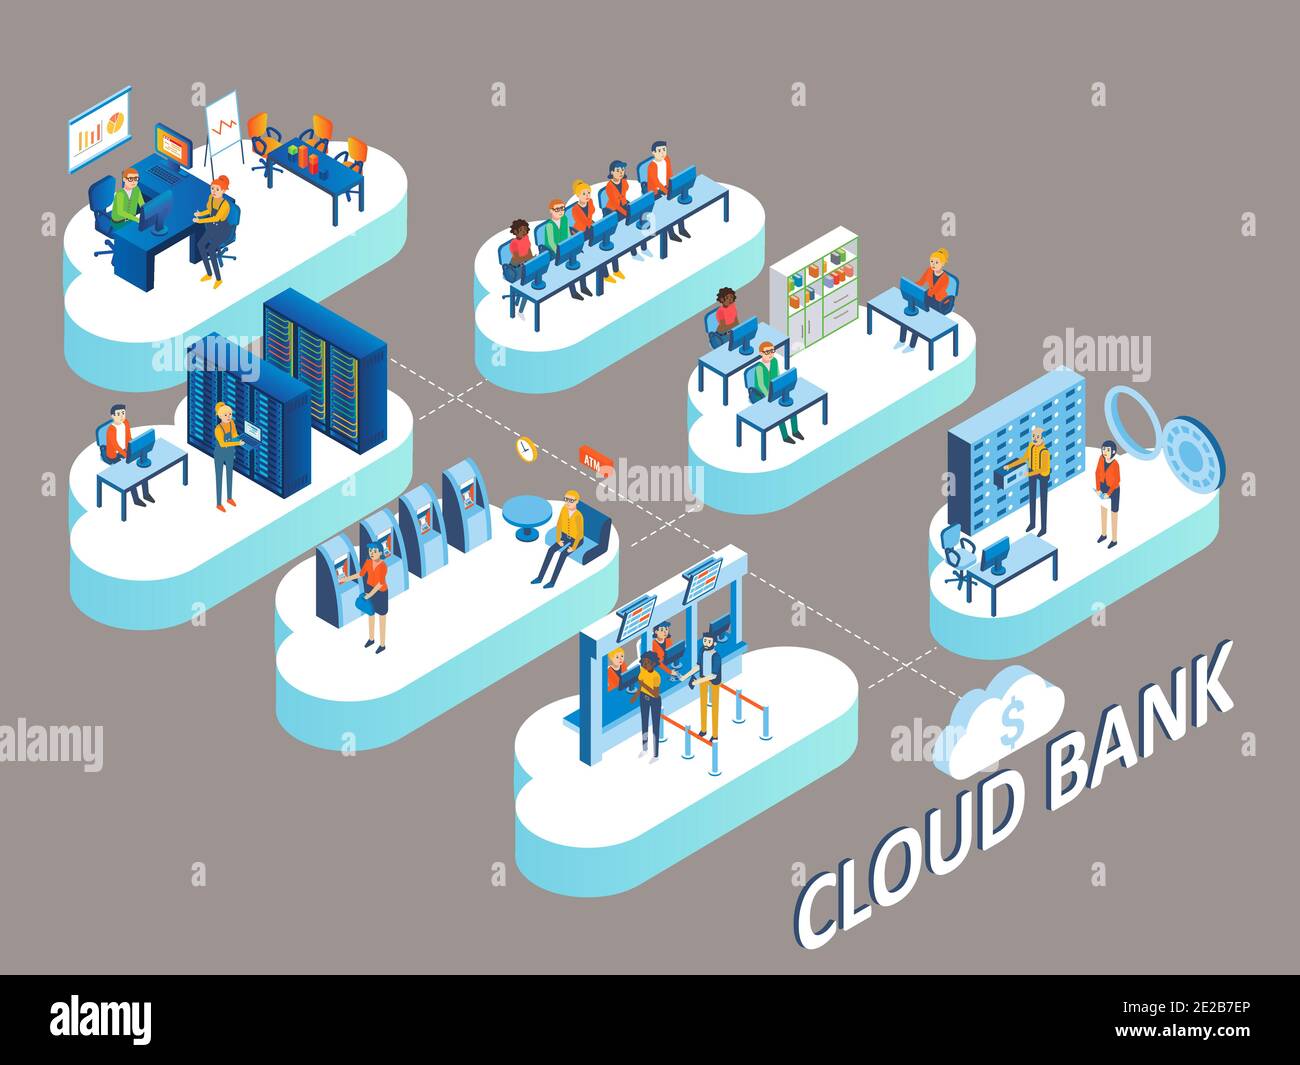 Cloud bank concept vector isometric illustration Stock Vector